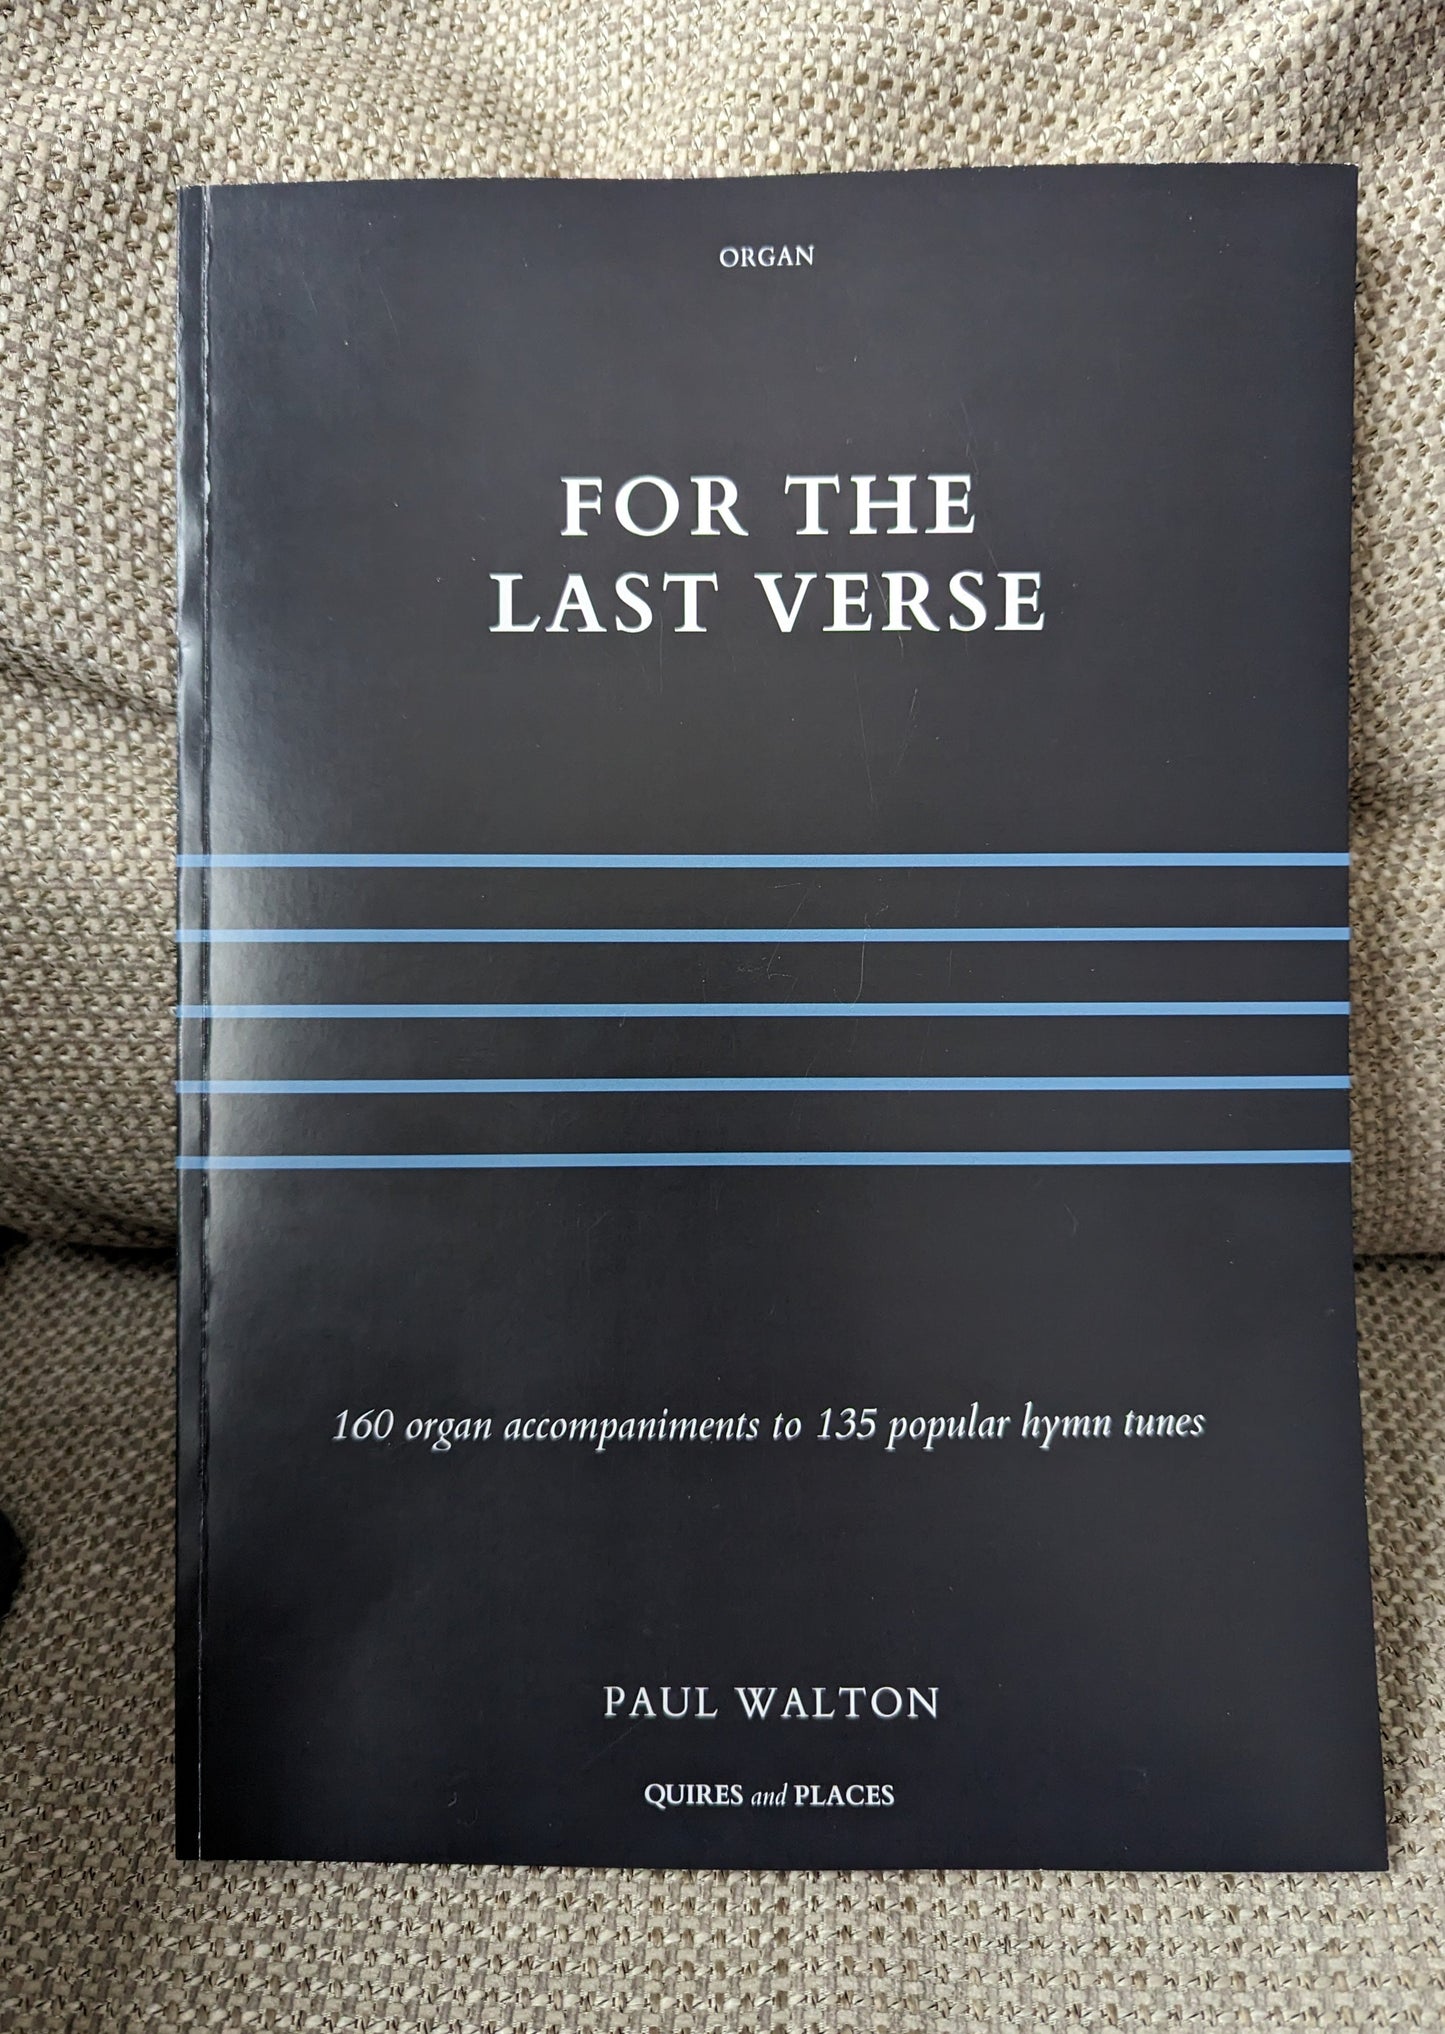 Walton, Paul: FOR THE LAST VERSE (ORGAN)